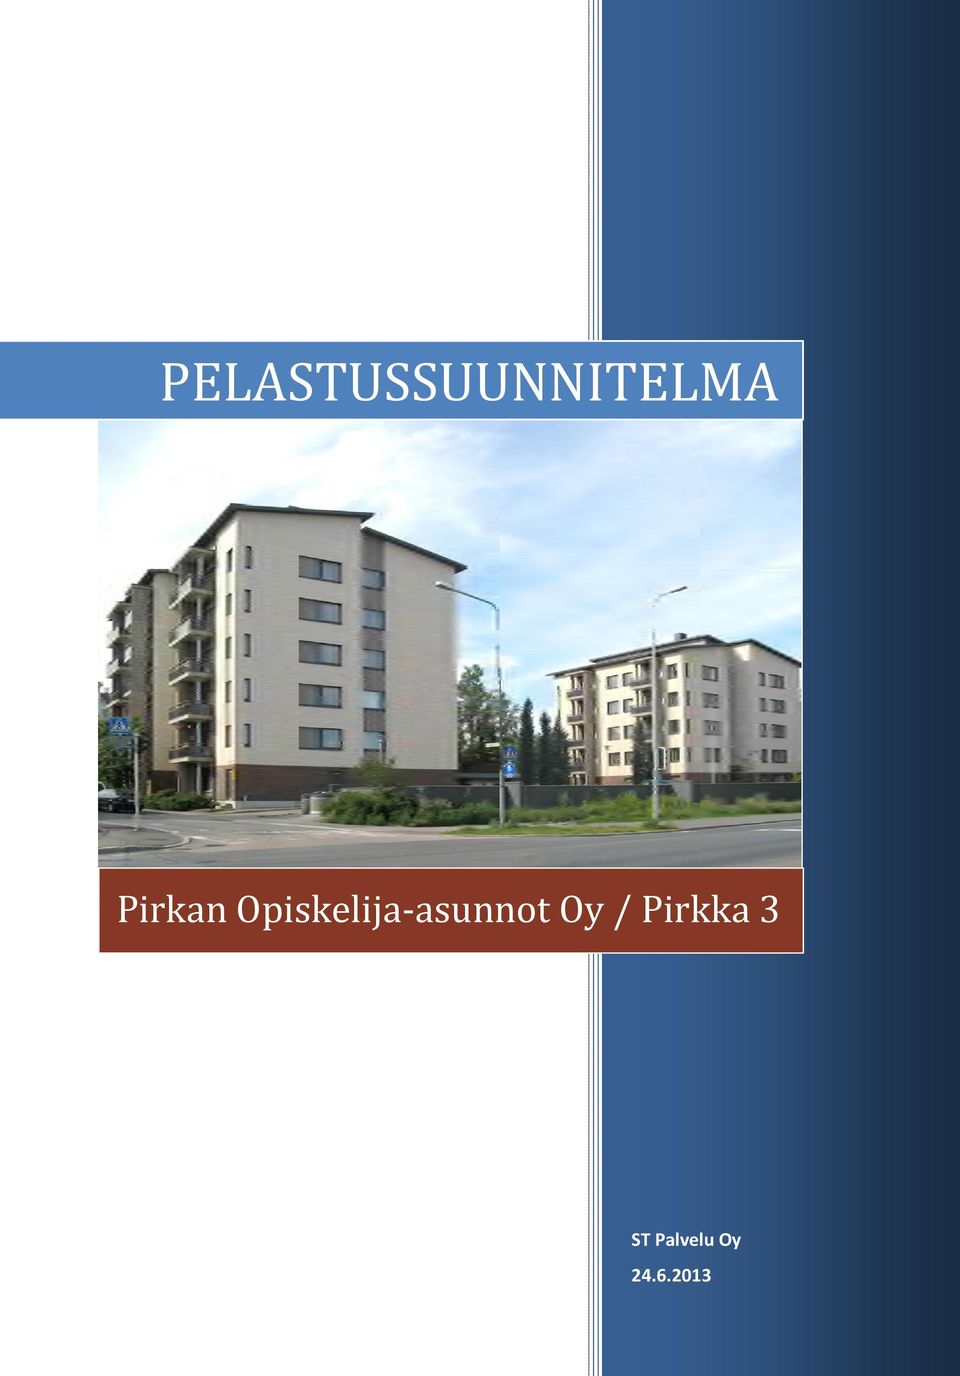 asunnot Oy / Pirkka